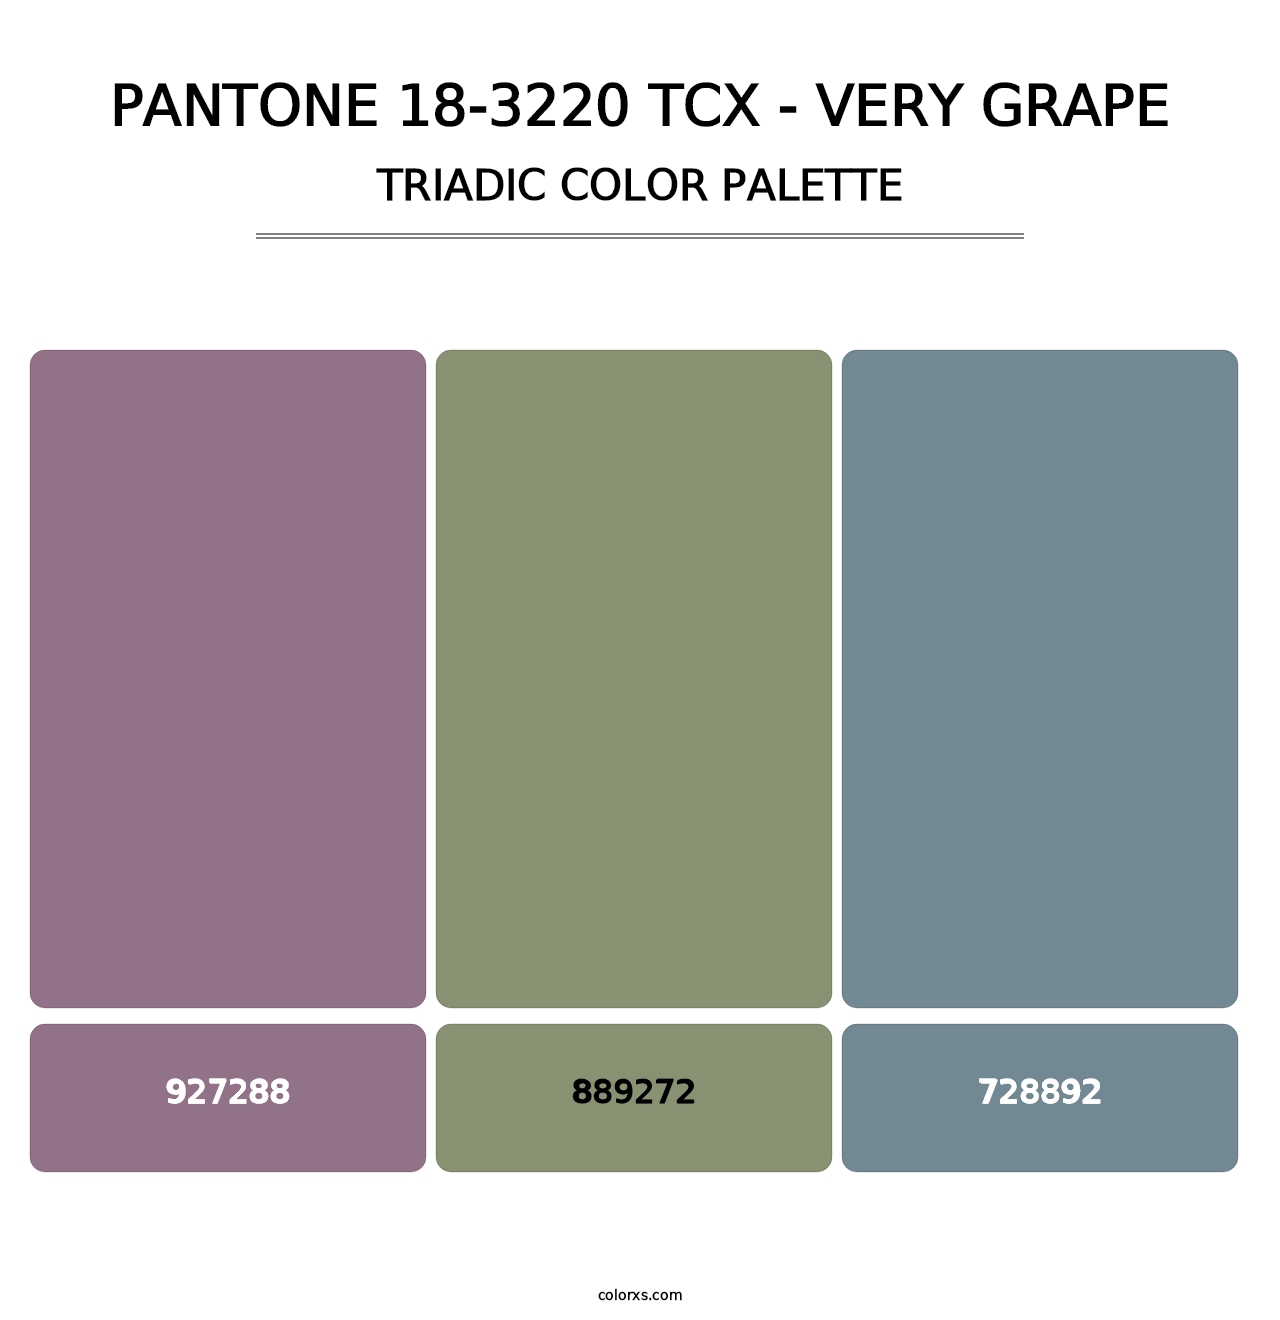 PANTONE 18-3220 TCX - Very Grape - Triadic Color Palette